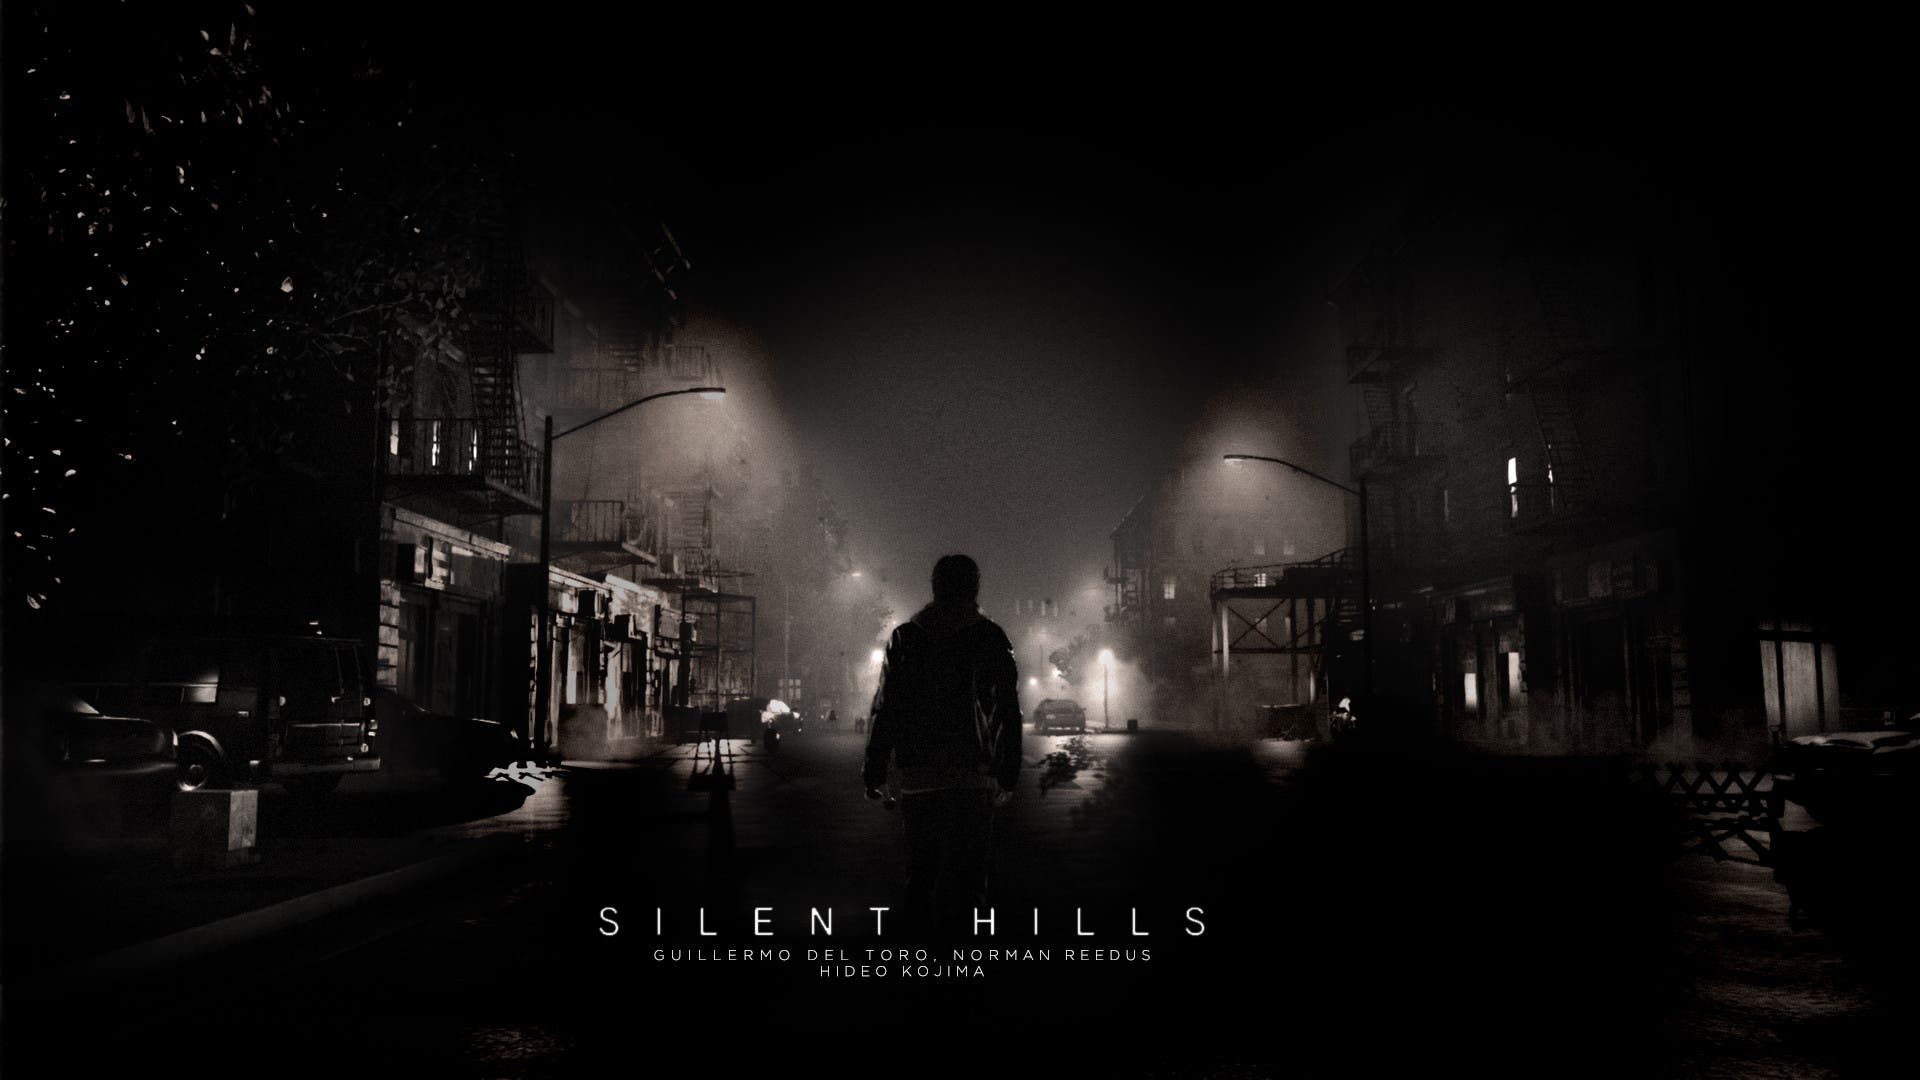 La ilusión rota del P.T. de Silent Hill